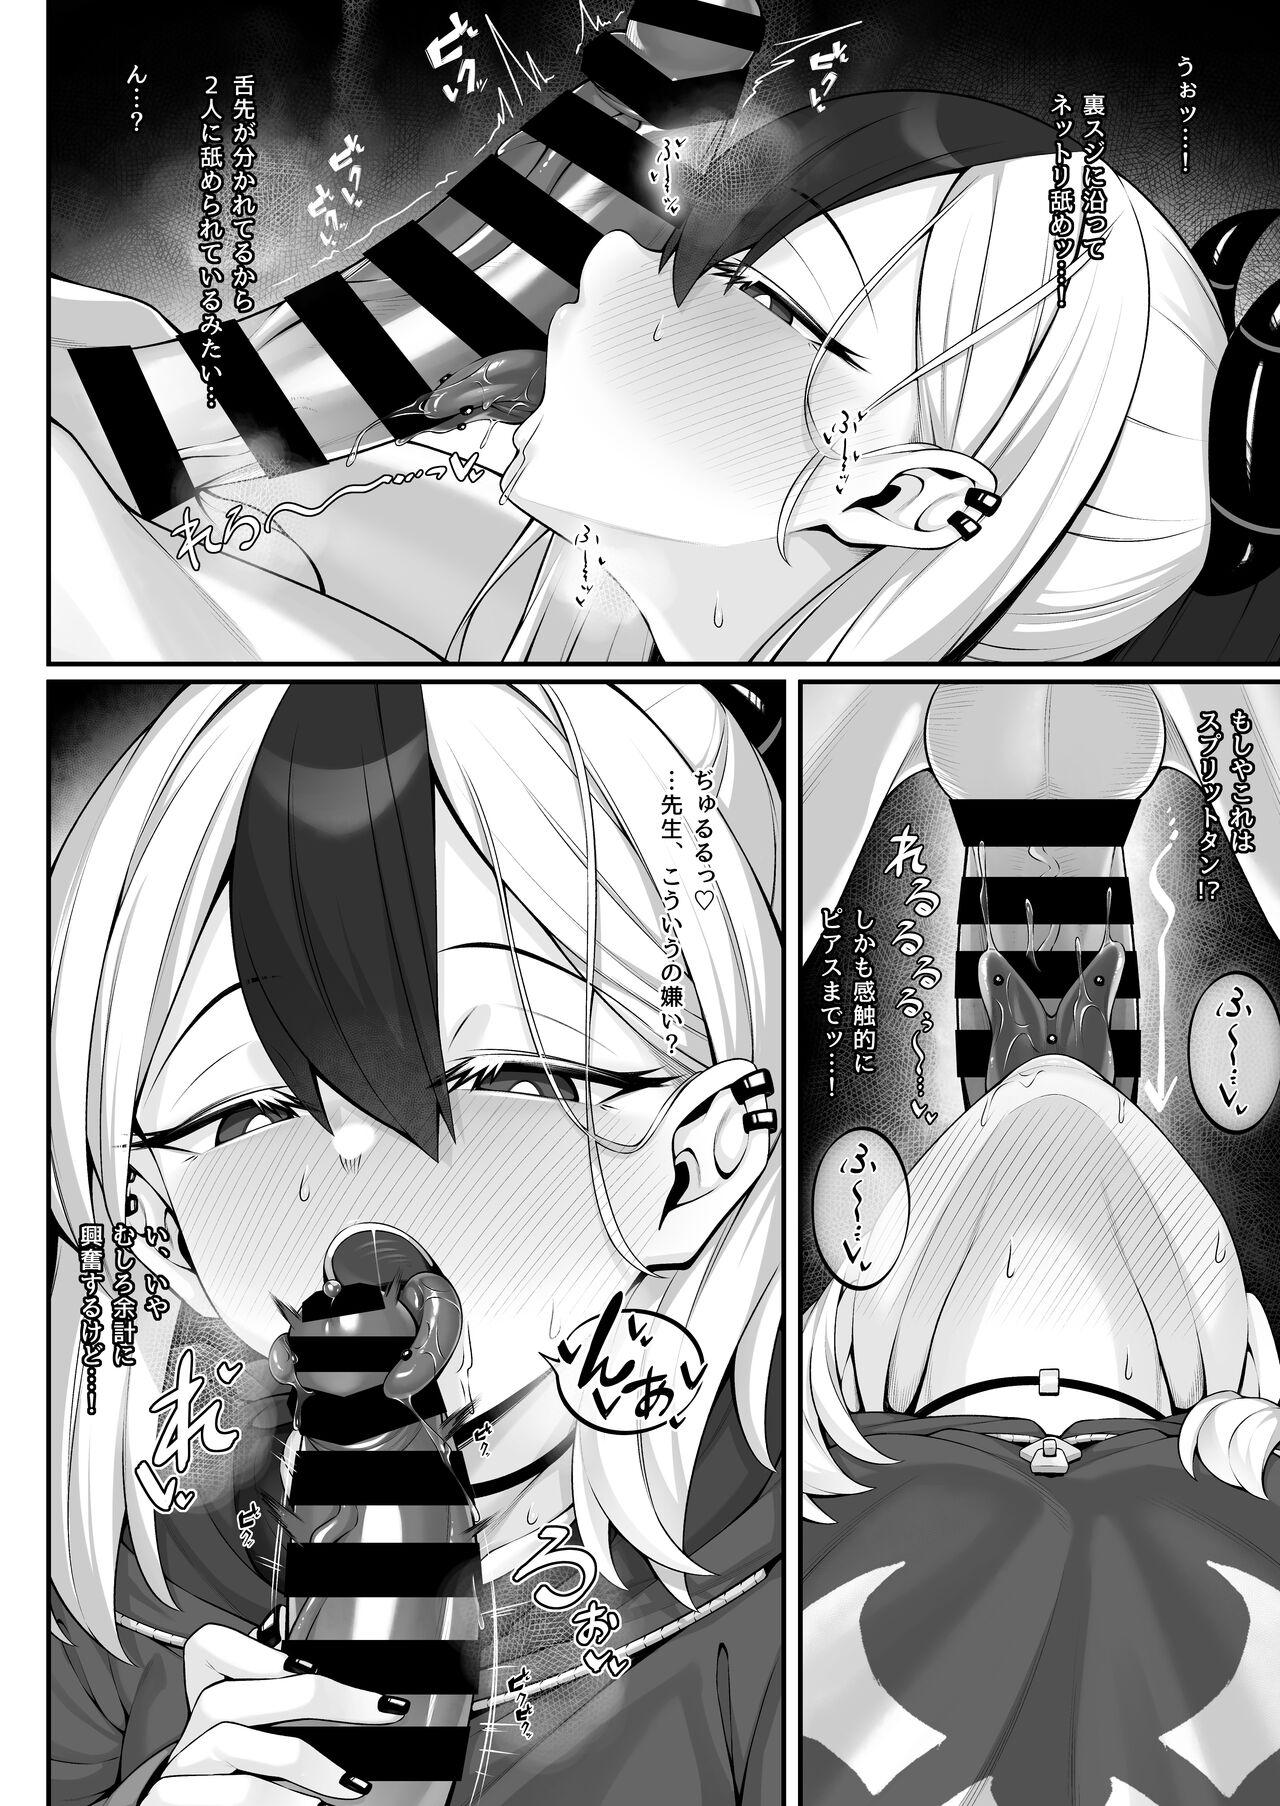 Pov Sex Sputum Shita-pi Kayoko ni Fella de Nuite Morau dake no Tanpen Manga - Blue archive Butts - Page 3